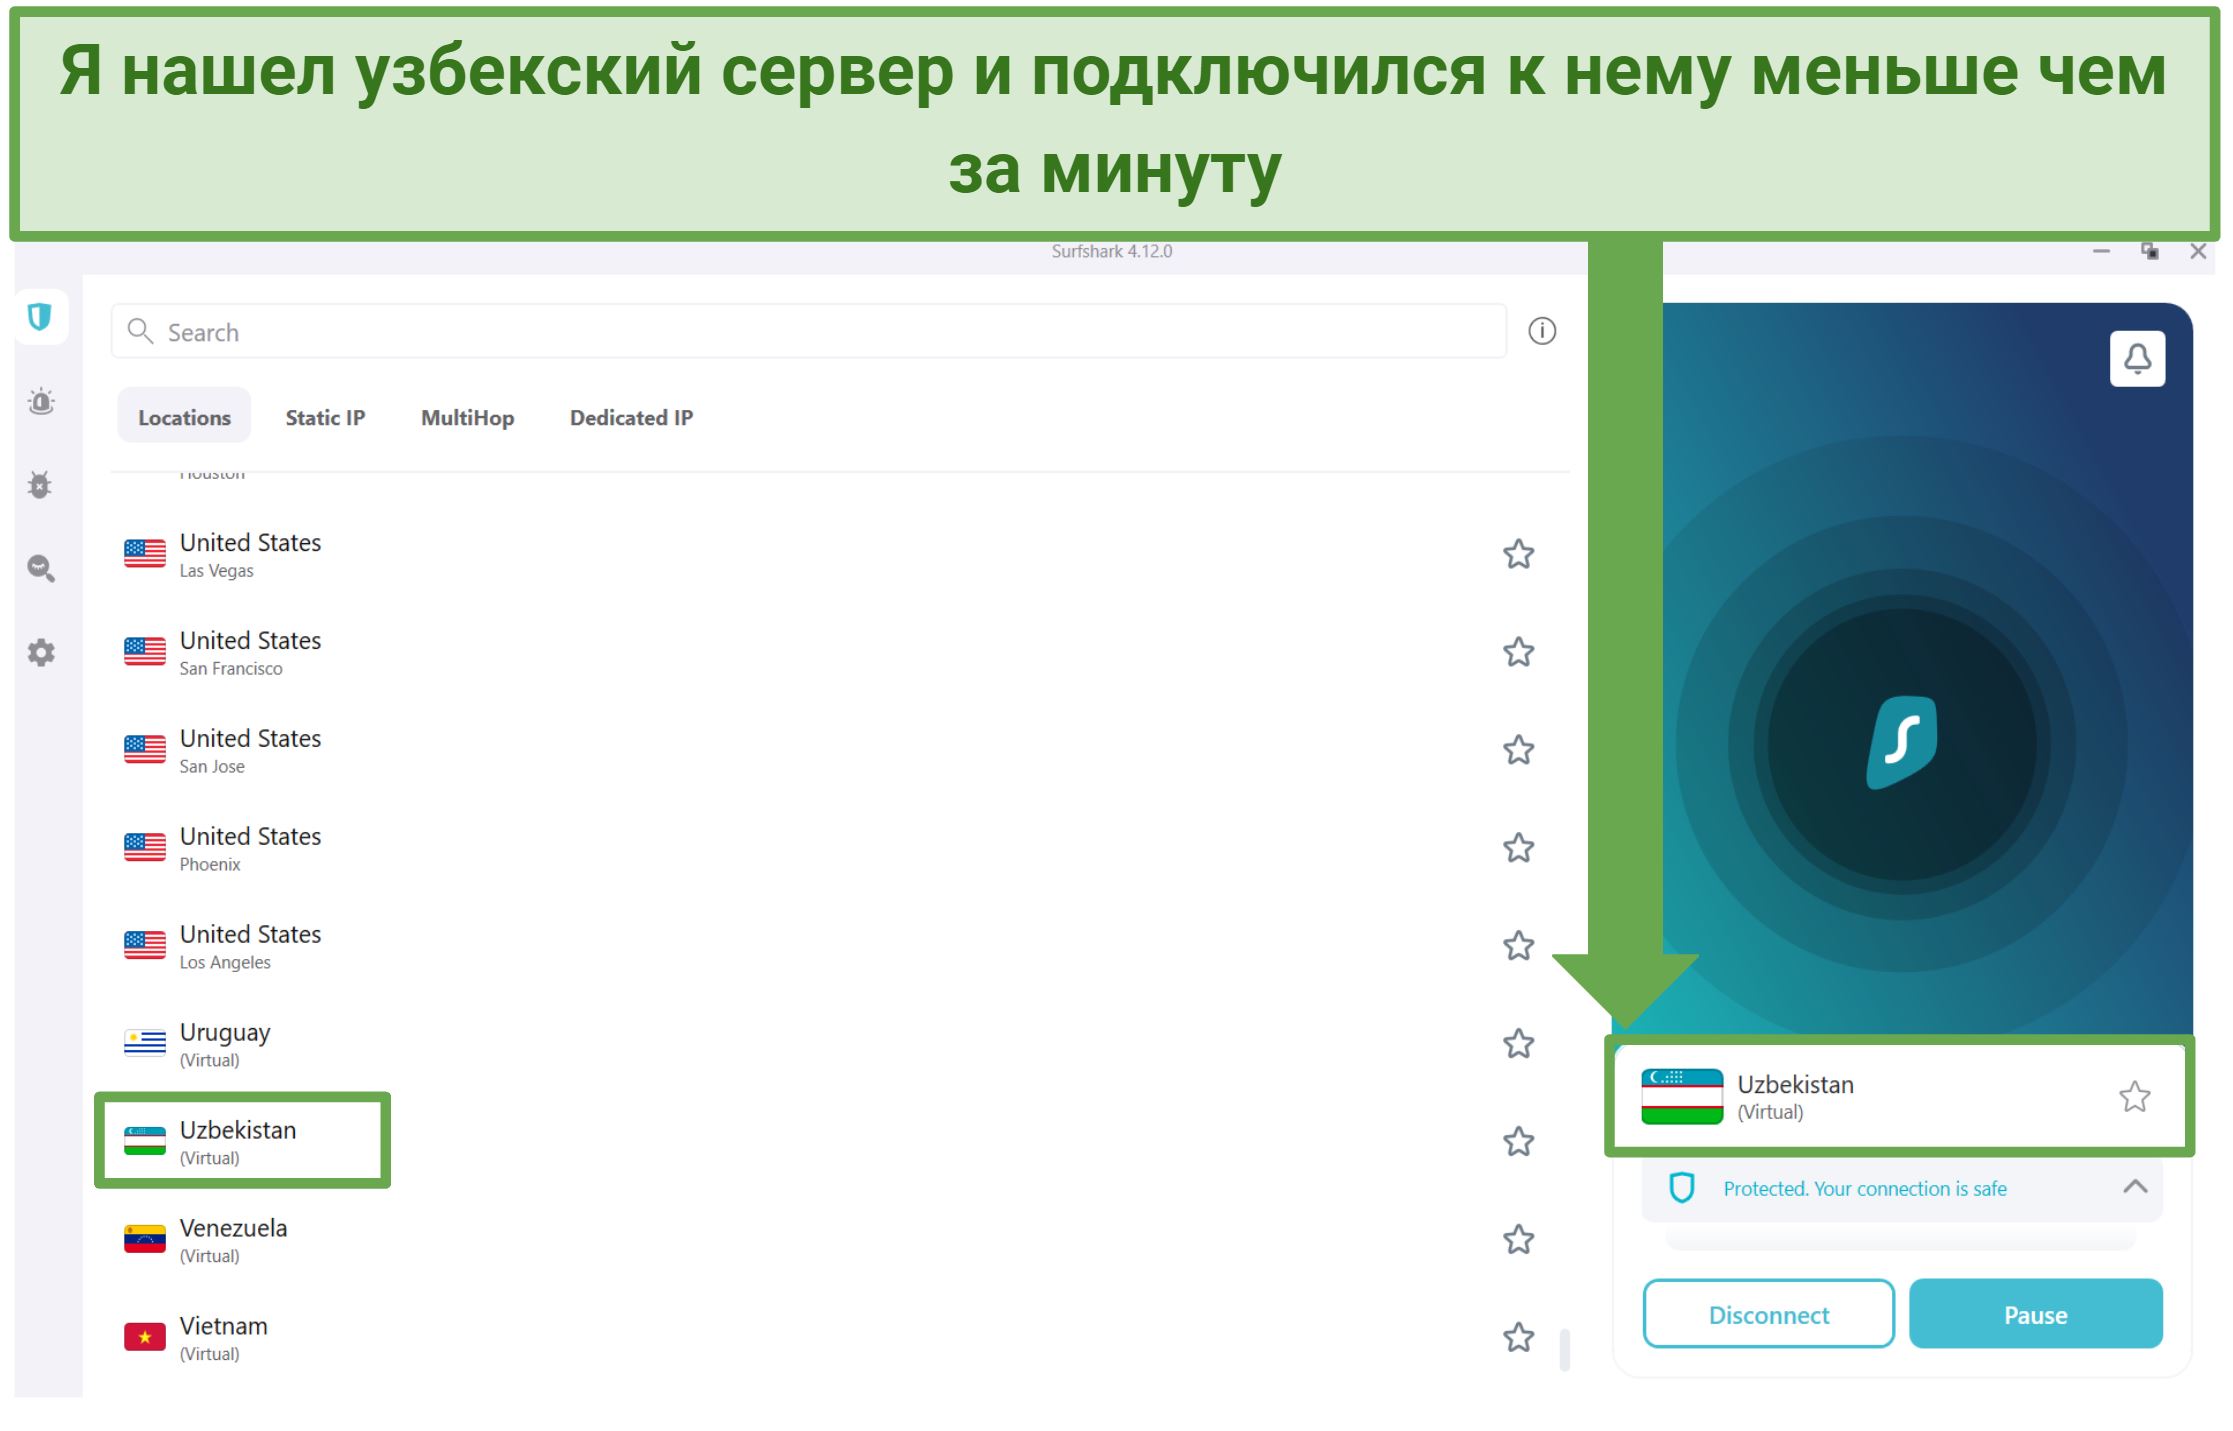 A screenshot of Surfshark's easy to use UI